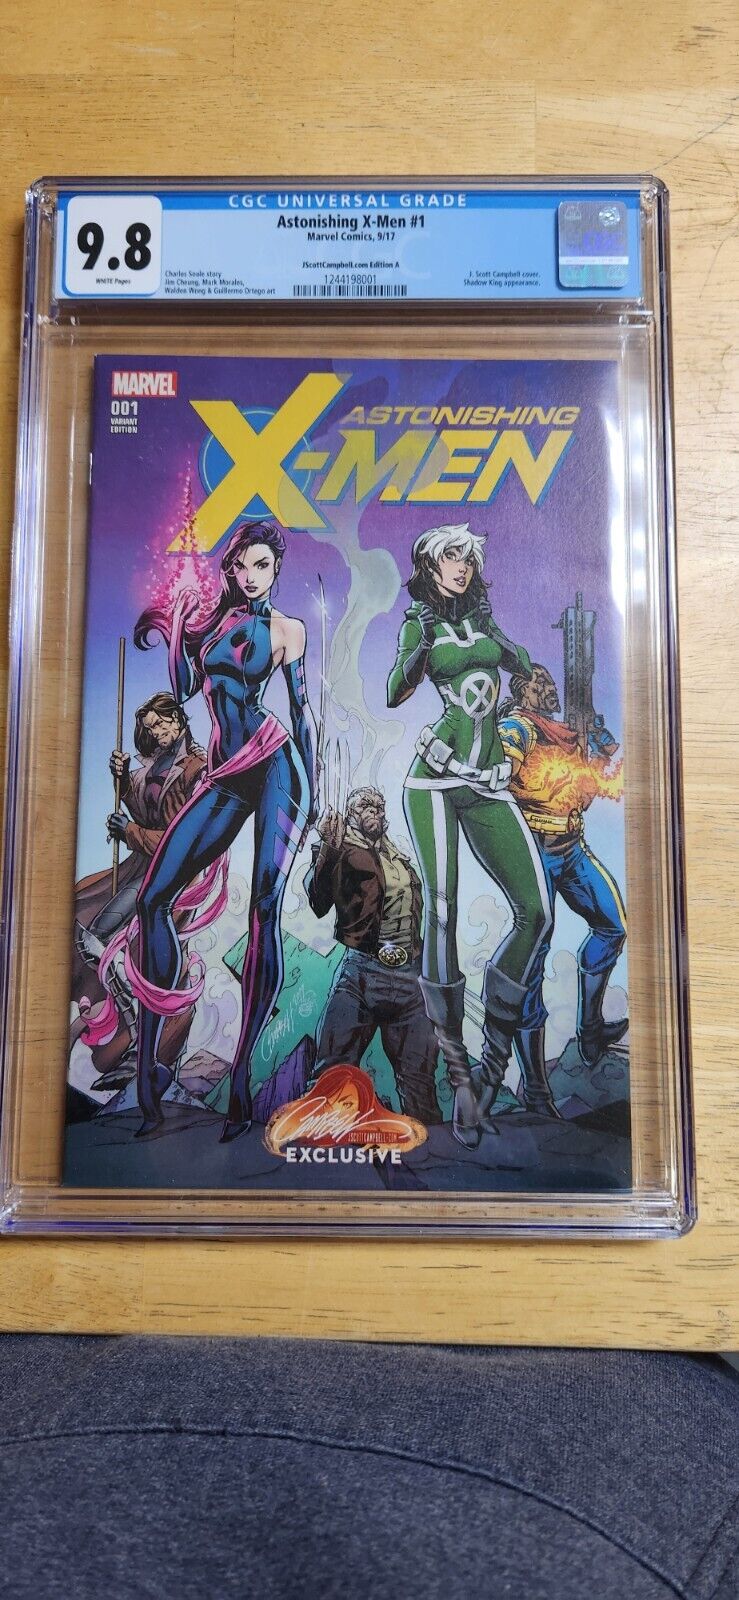 Astonishing X-Men #1 CGC 9.8 JSC J. Scott Campbell Cover A